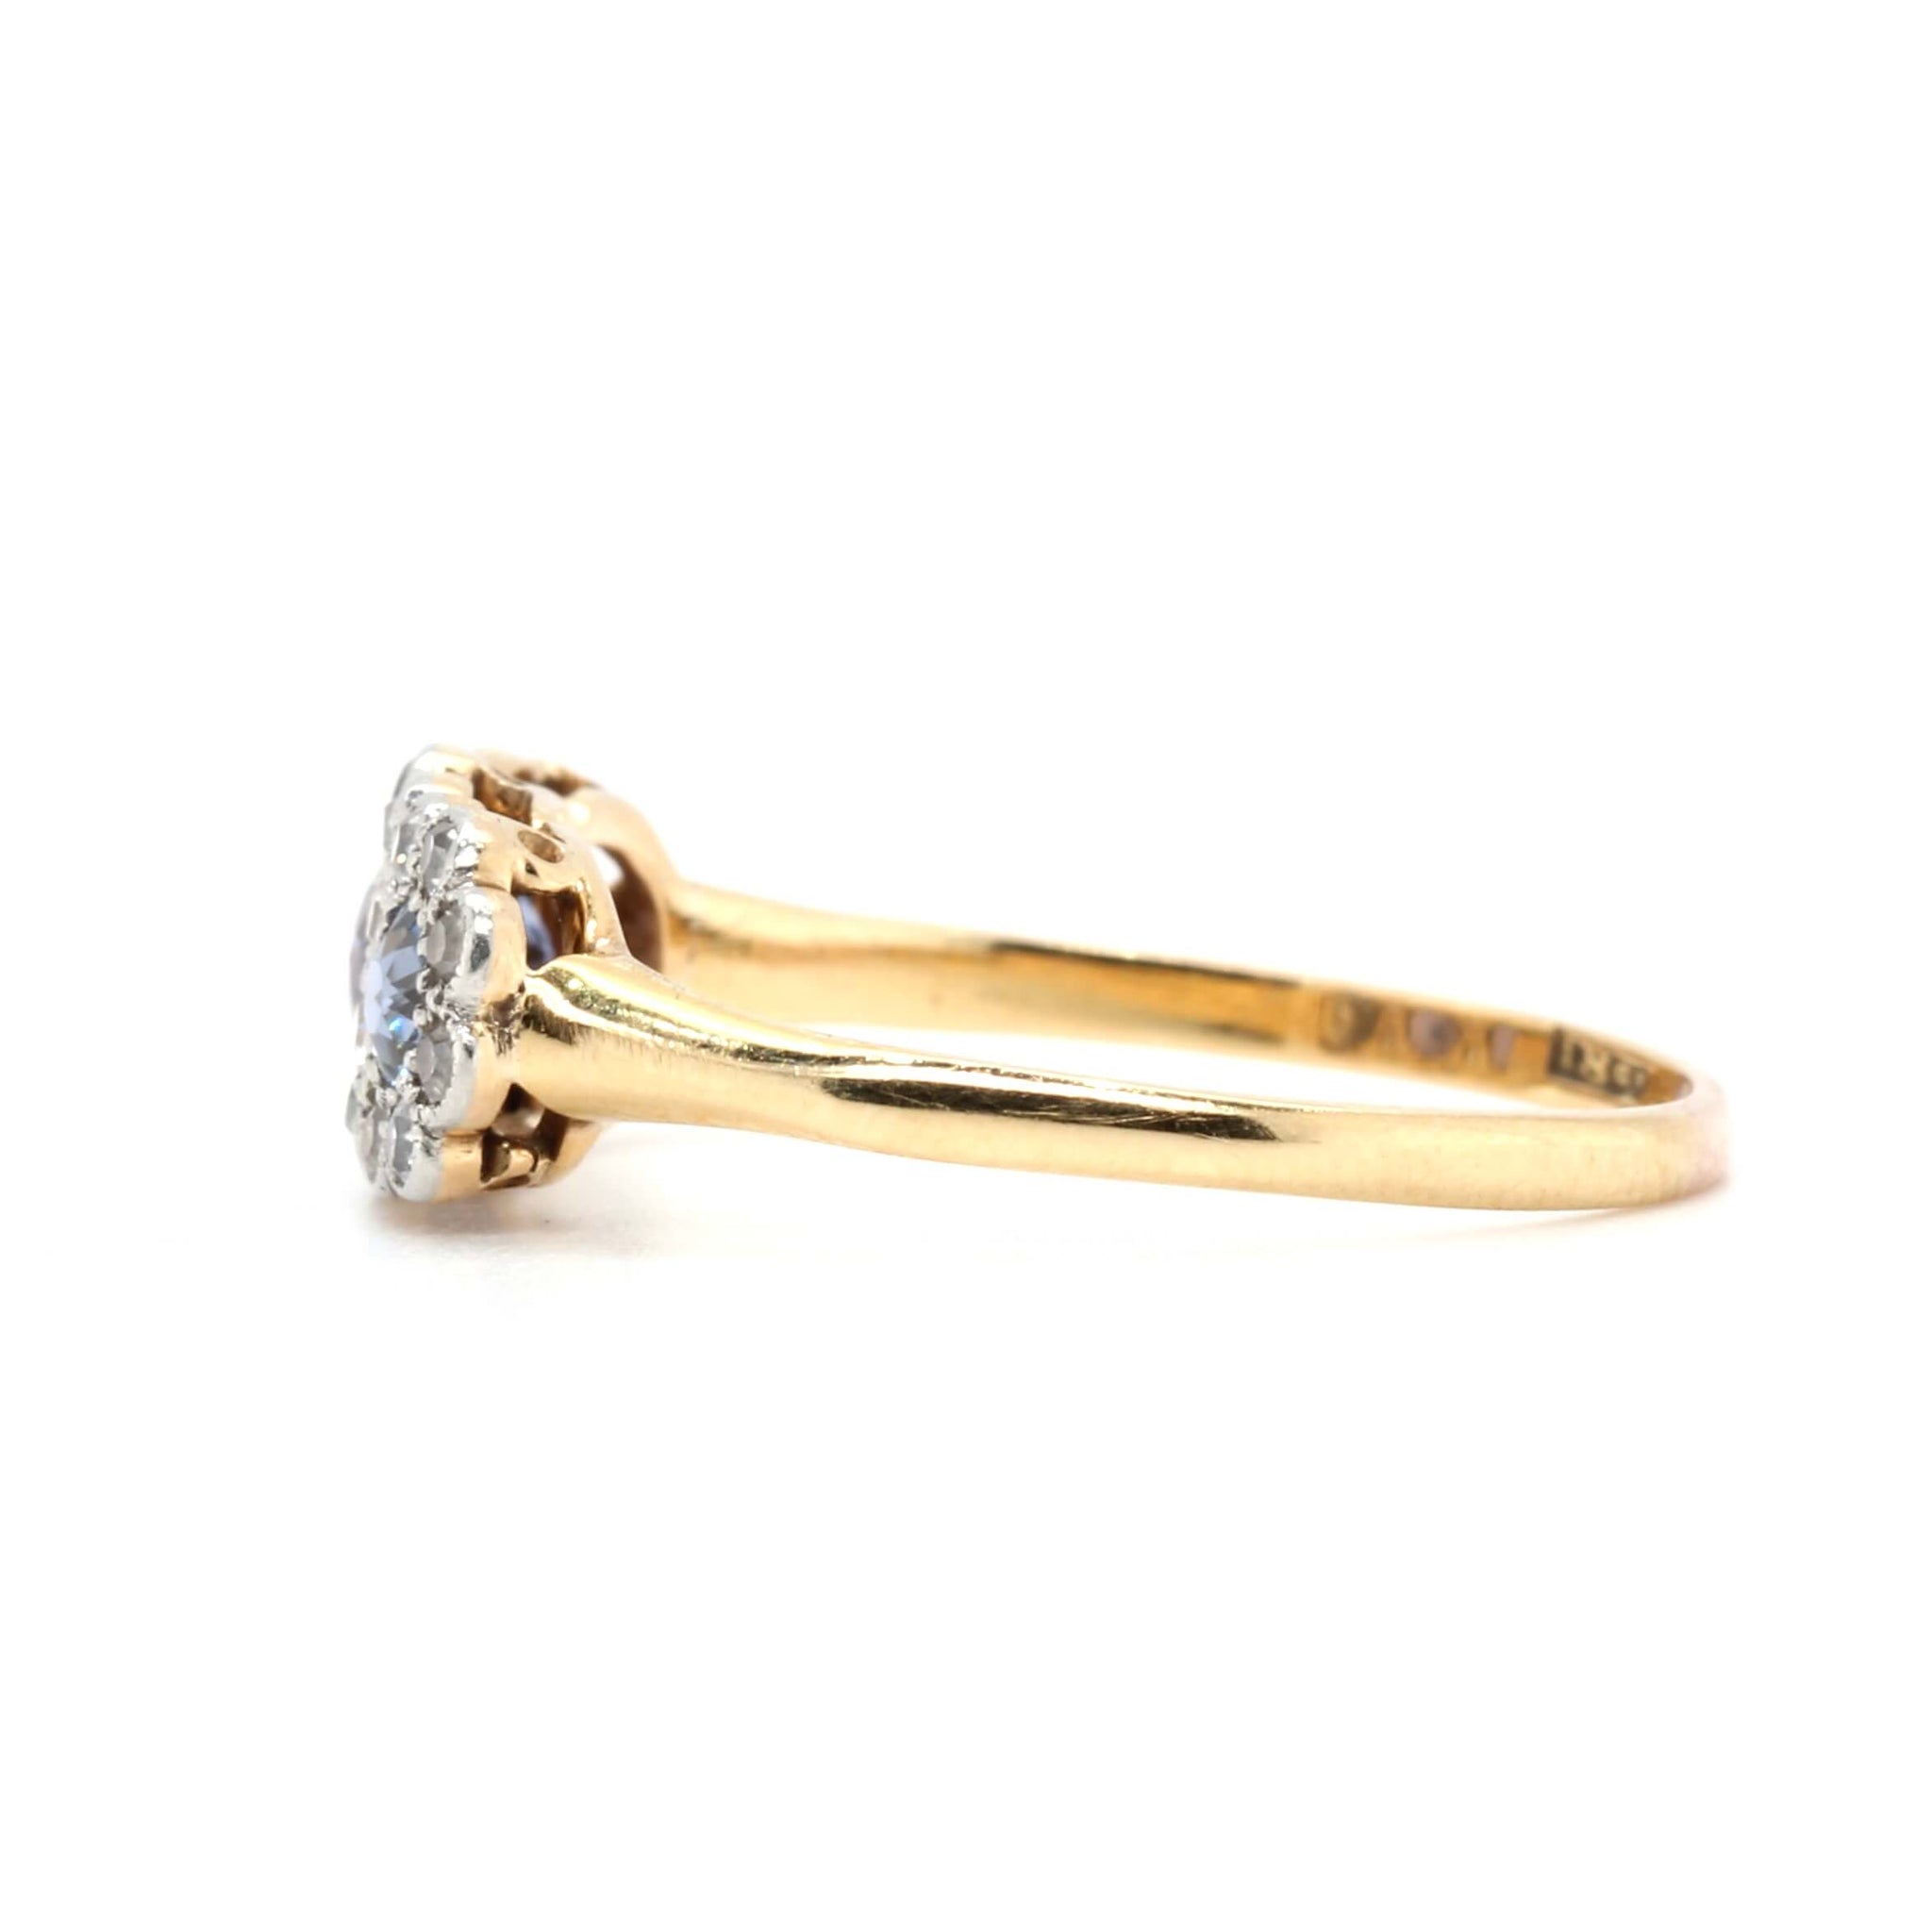 Edwardian Sapphire and Diamond Flower Ring